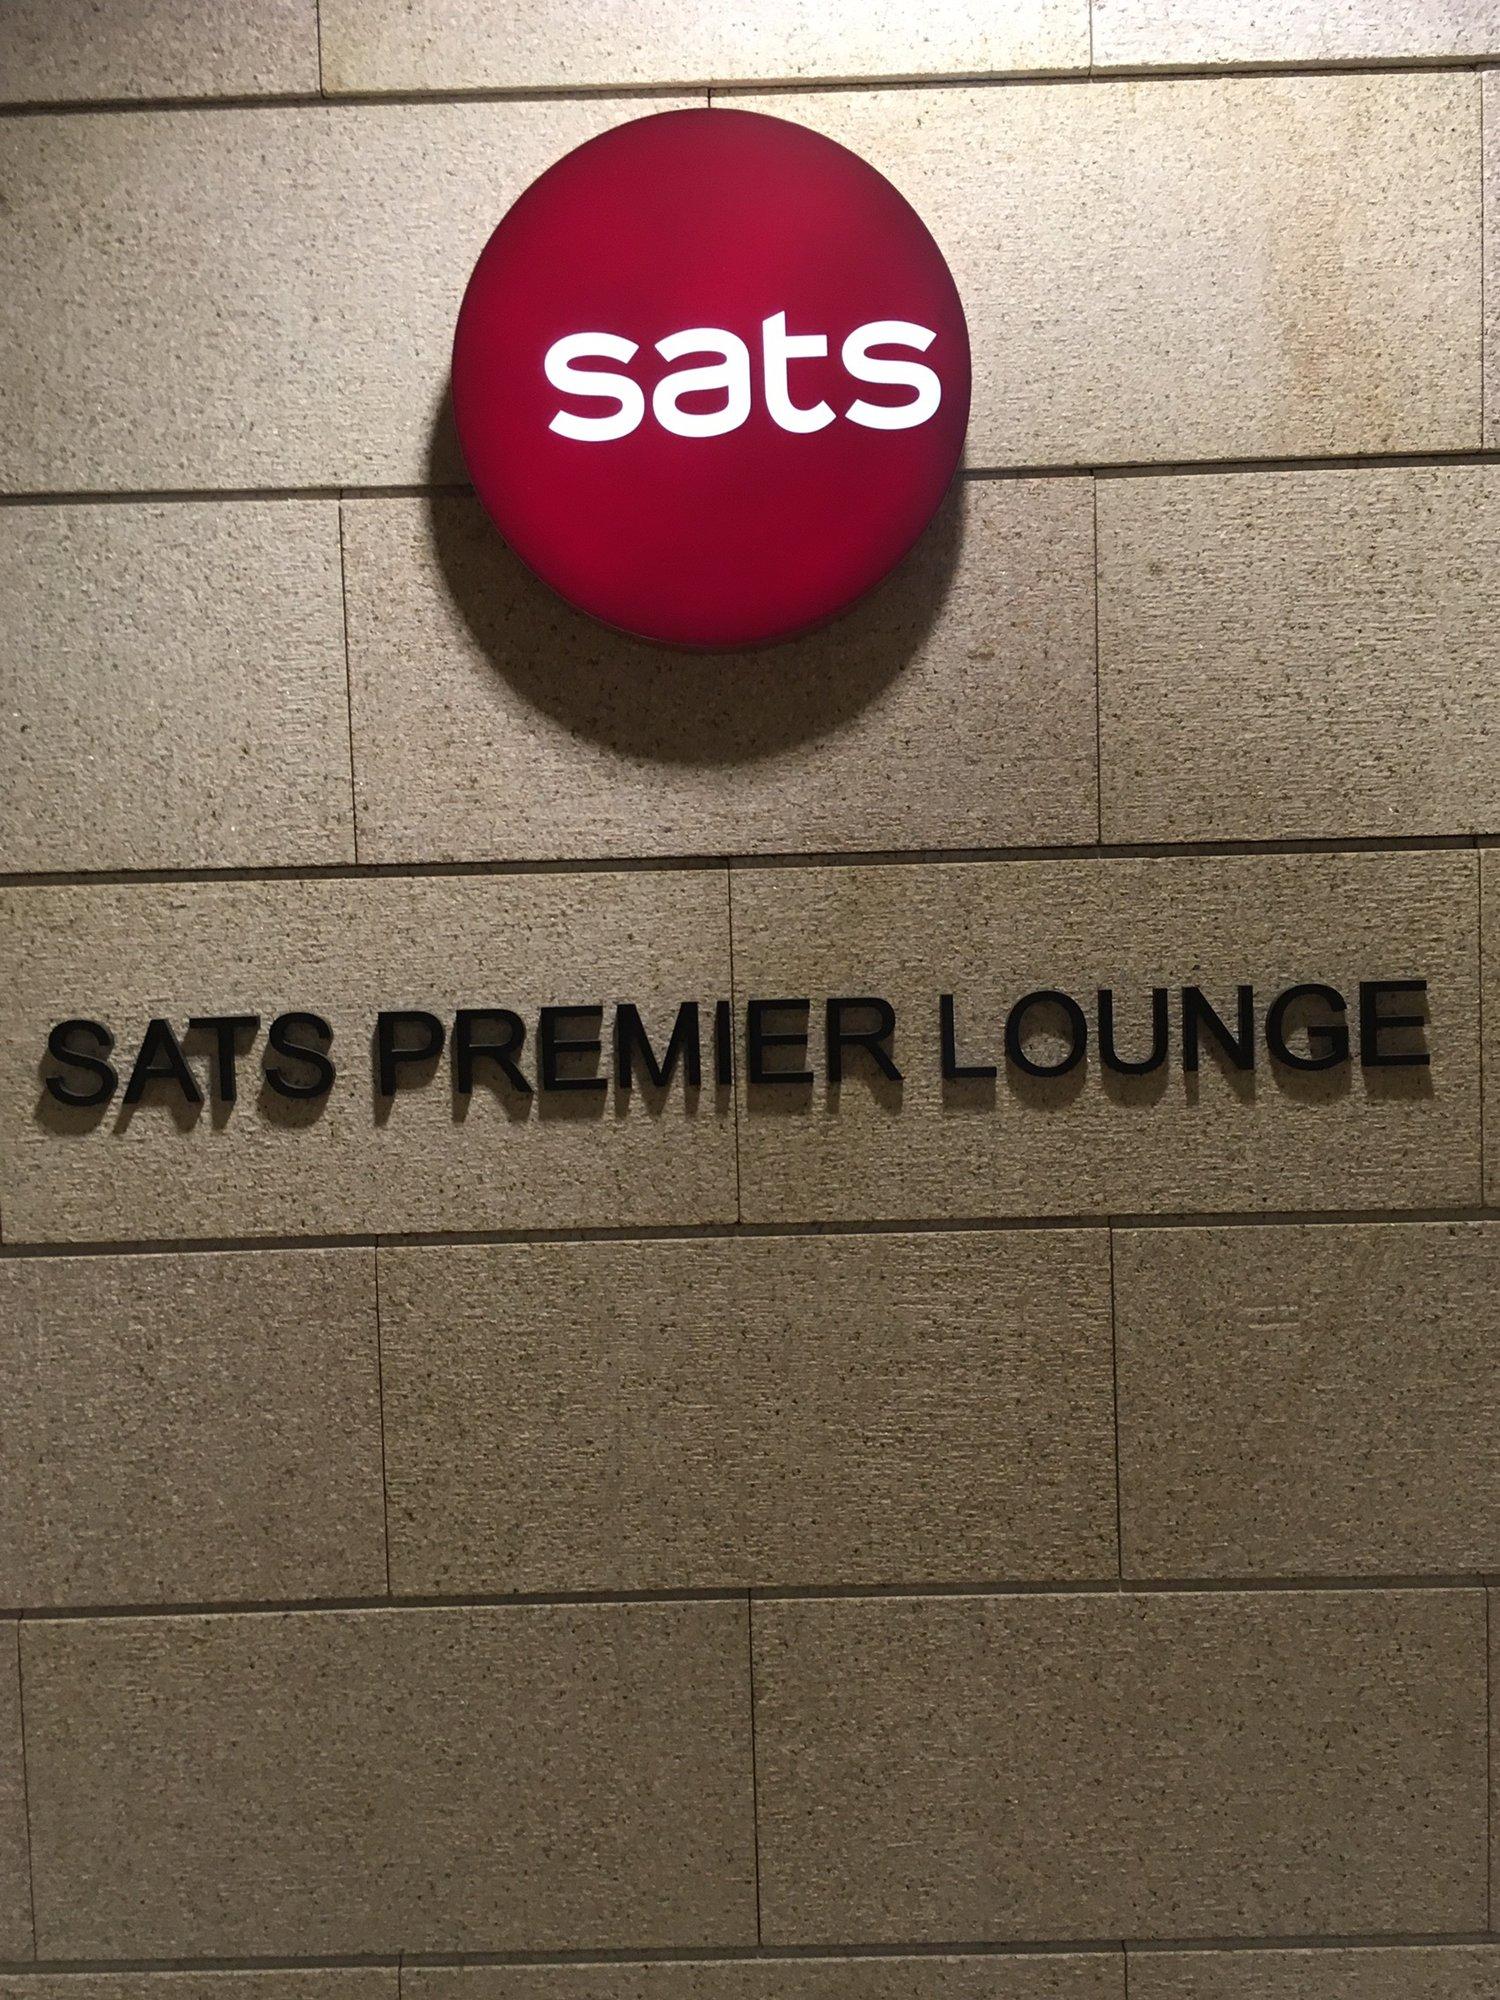 SATS Premier Lounge image 32 of 46